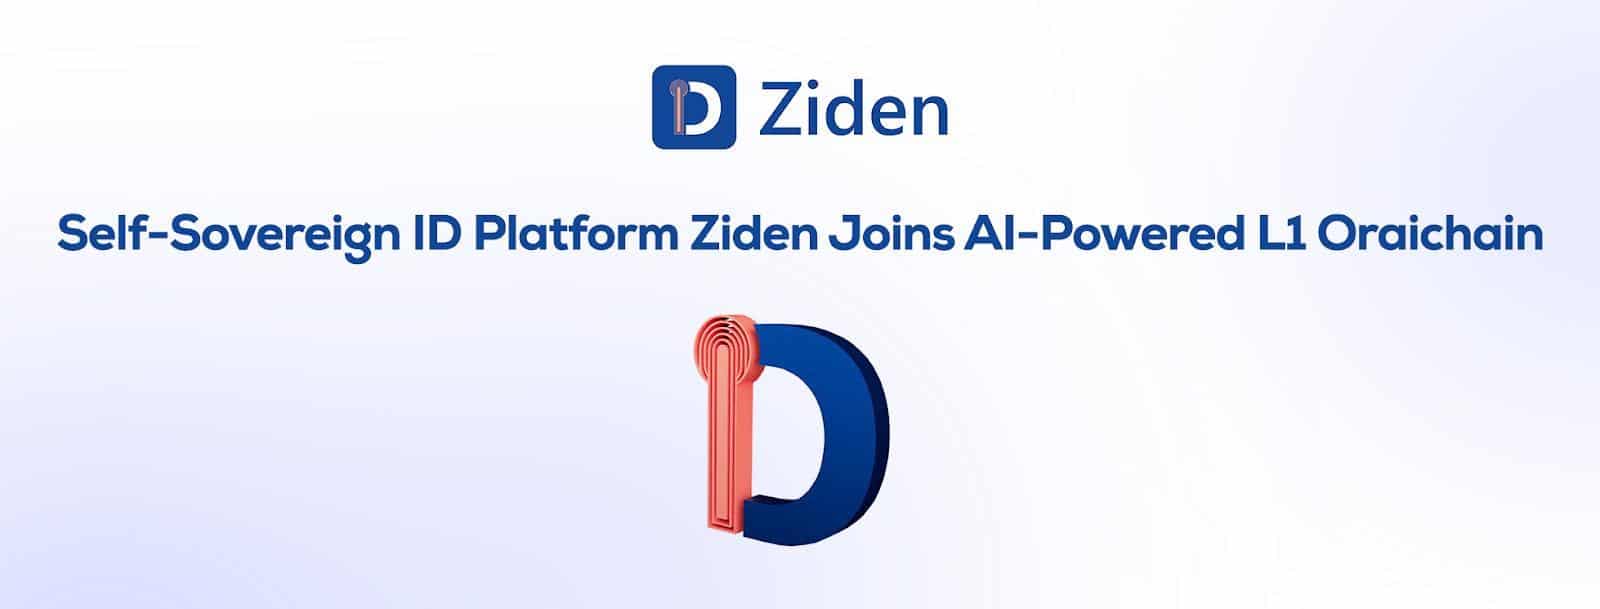 Self-sovereign-id-platform-ziden-joins-ai-powered-l1-oraichain